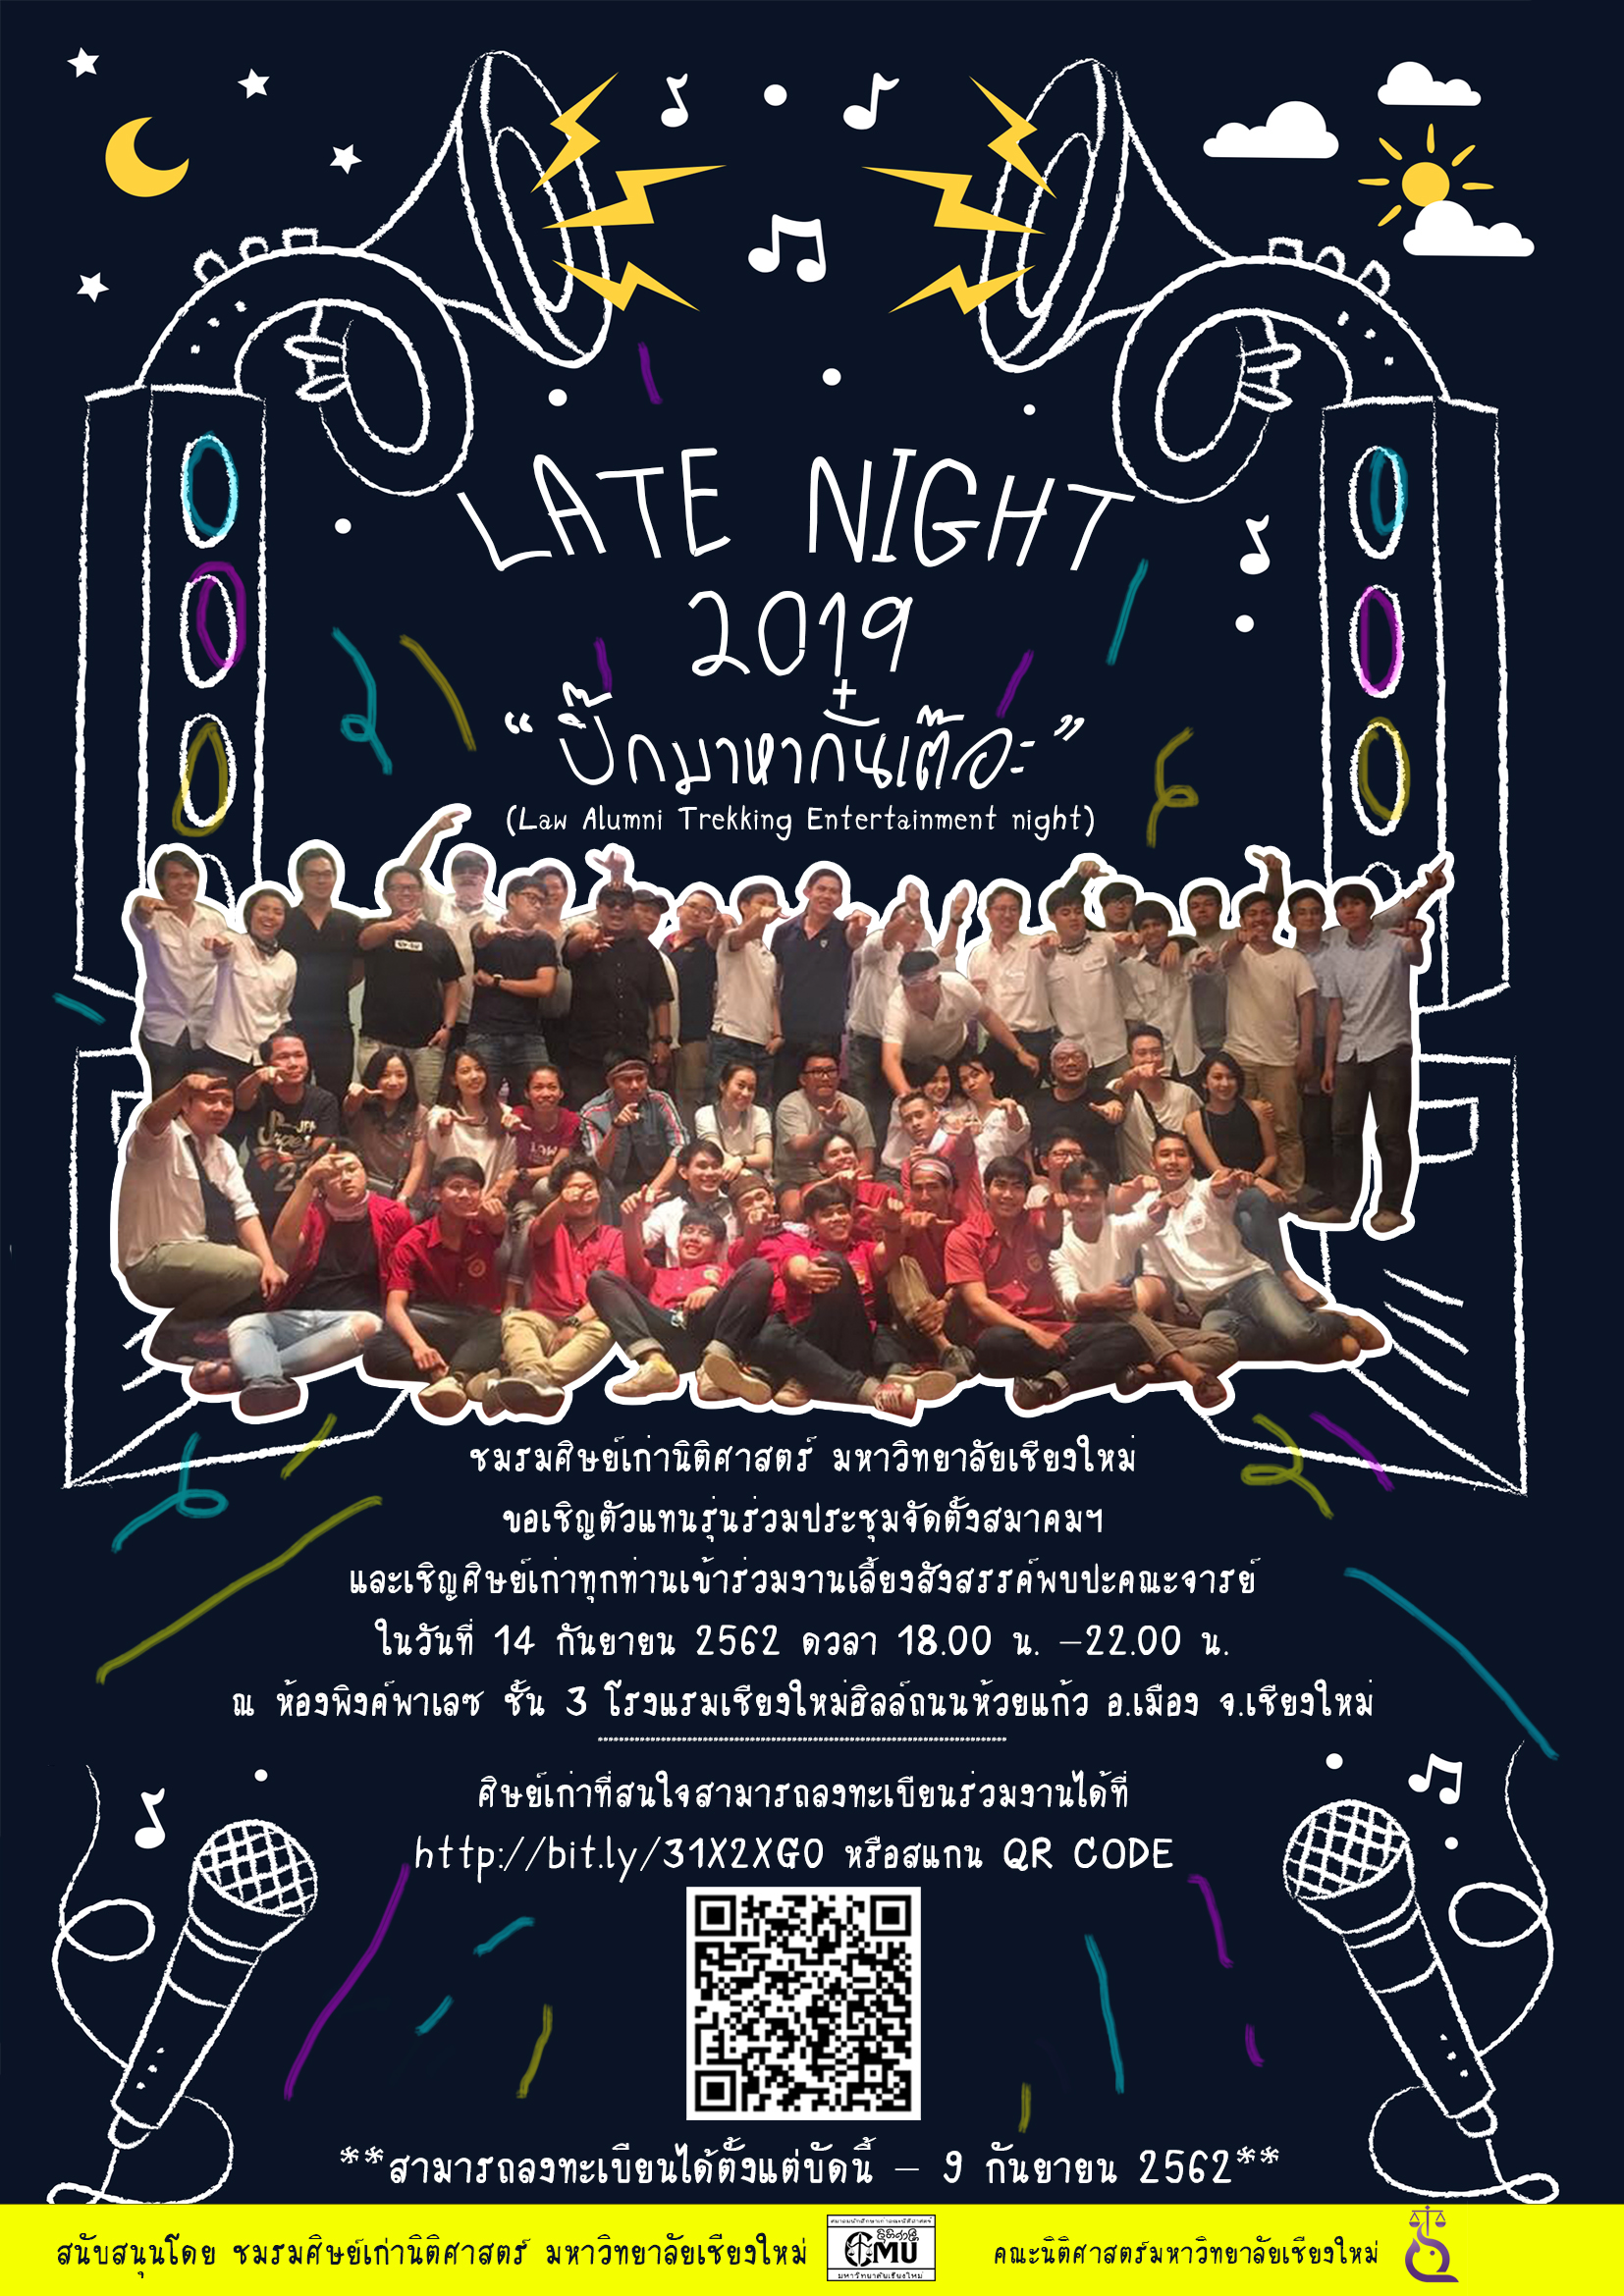 LATE NIGHT 2019(Law Alumni Trekking Entertainment night) “ปิ๊กมาหากั๋นเต๊อะ”